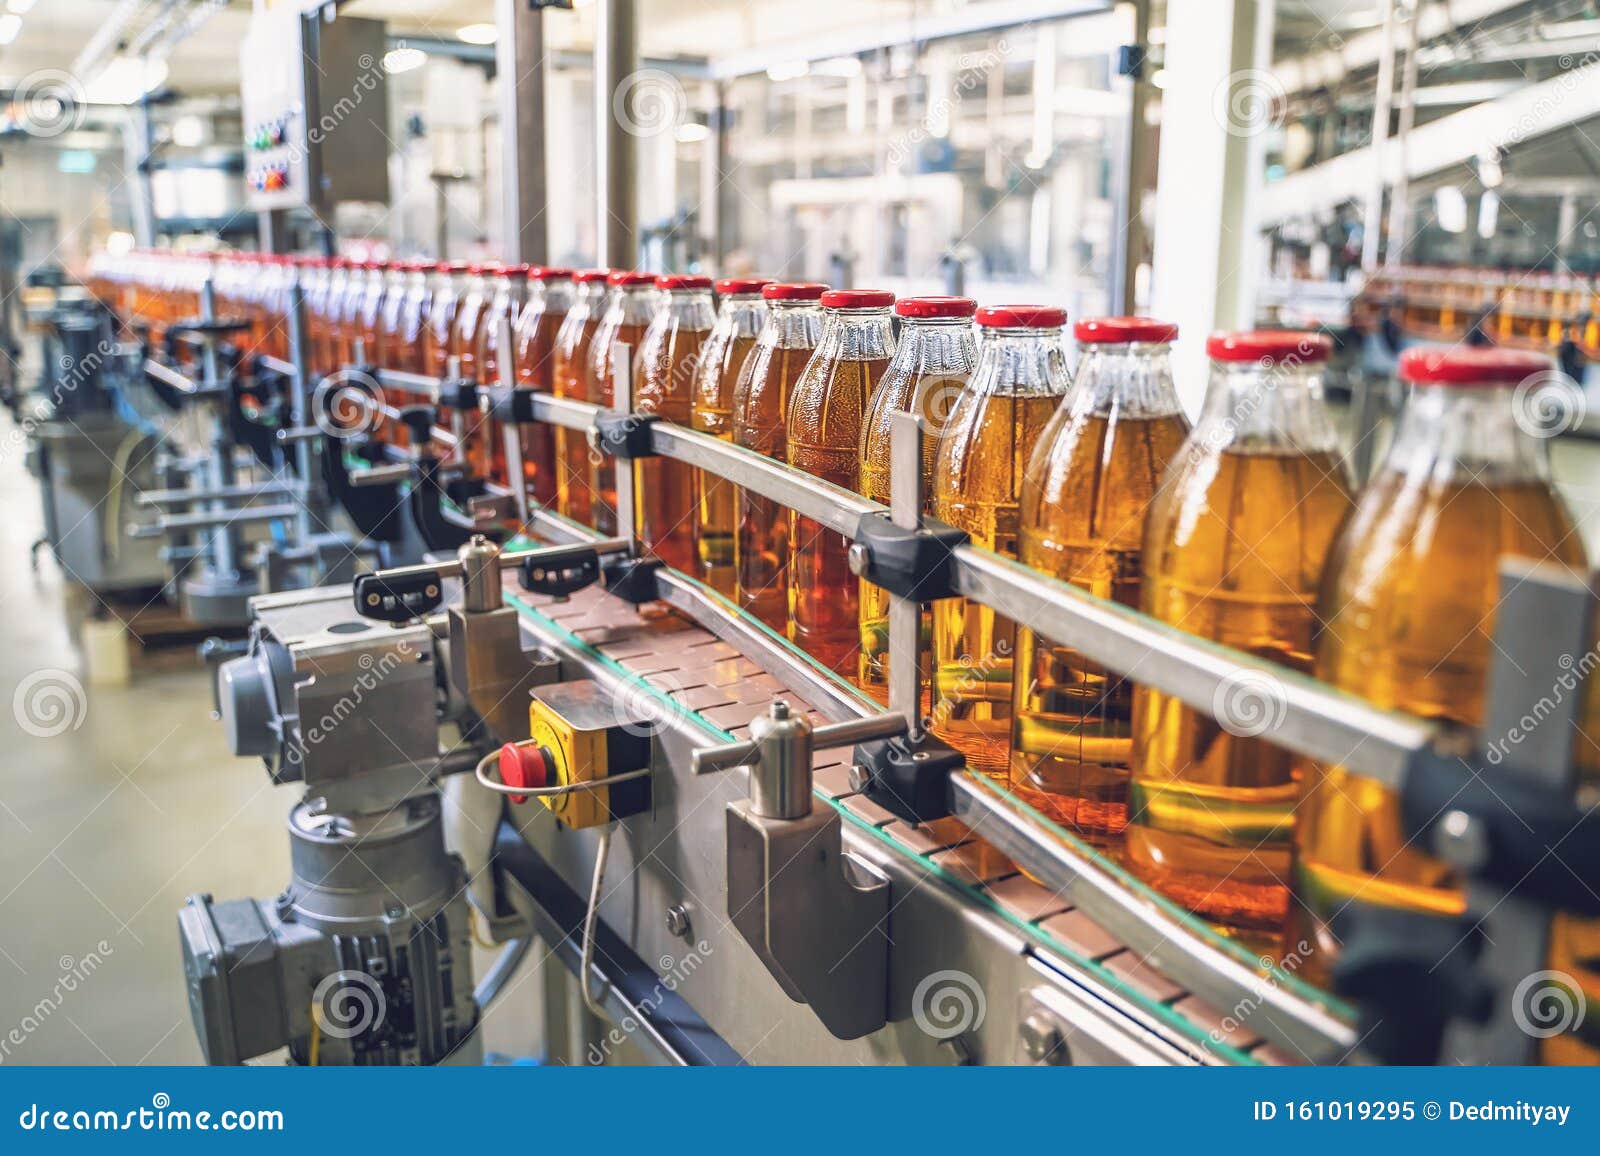 conveyor belt, juice in glass bottles on beverage plant or factory interior, industrial manufacturing production line